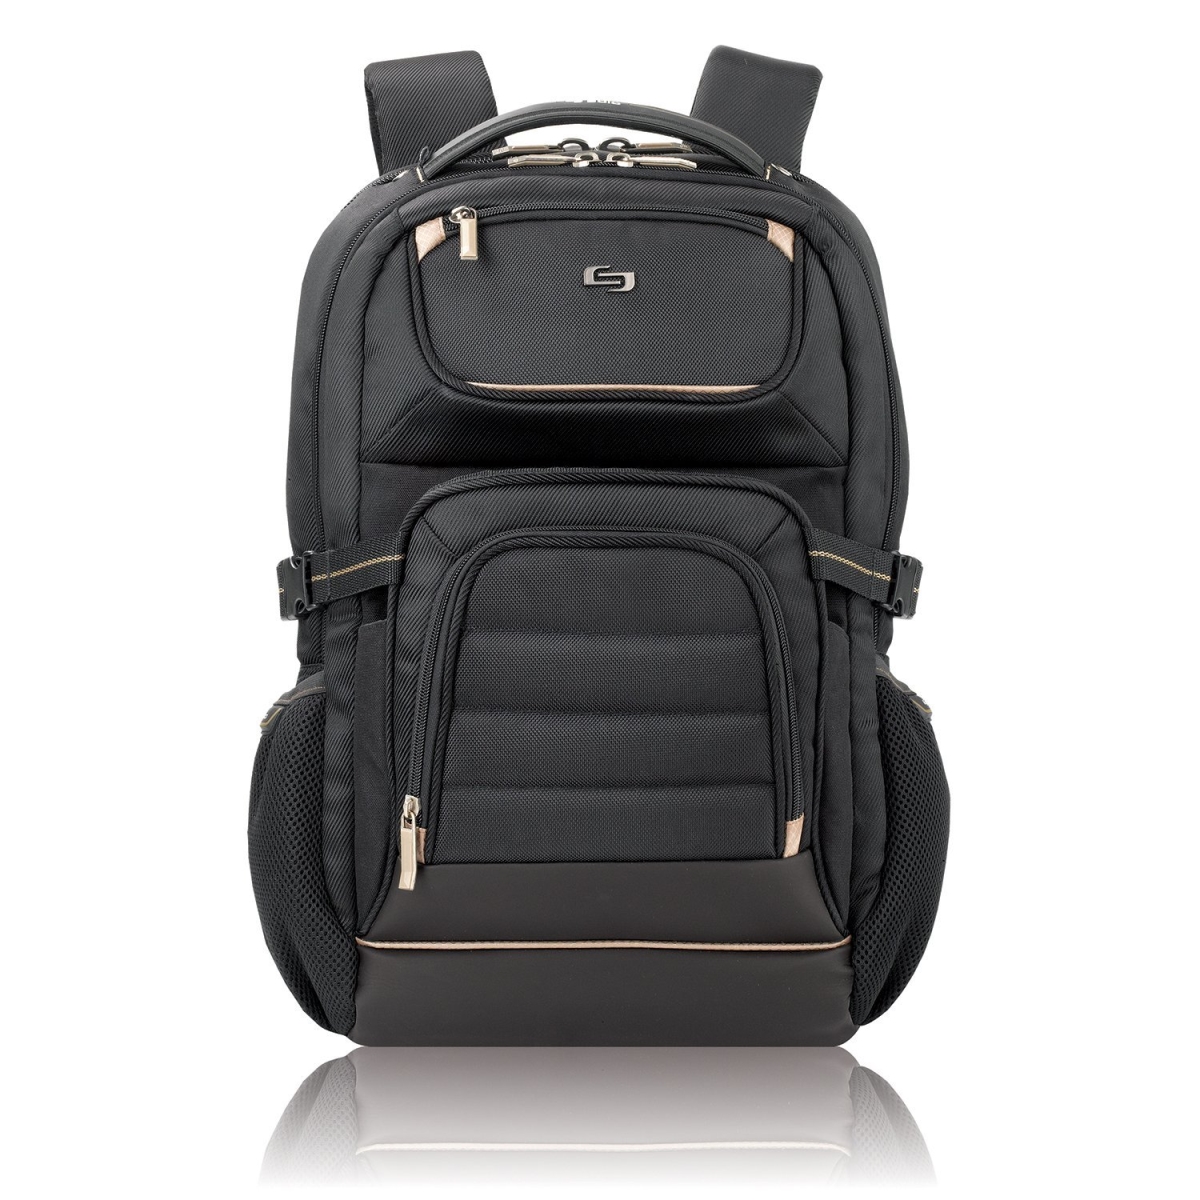 Ubn7503 17.3 In. Laptop Backpack - Black